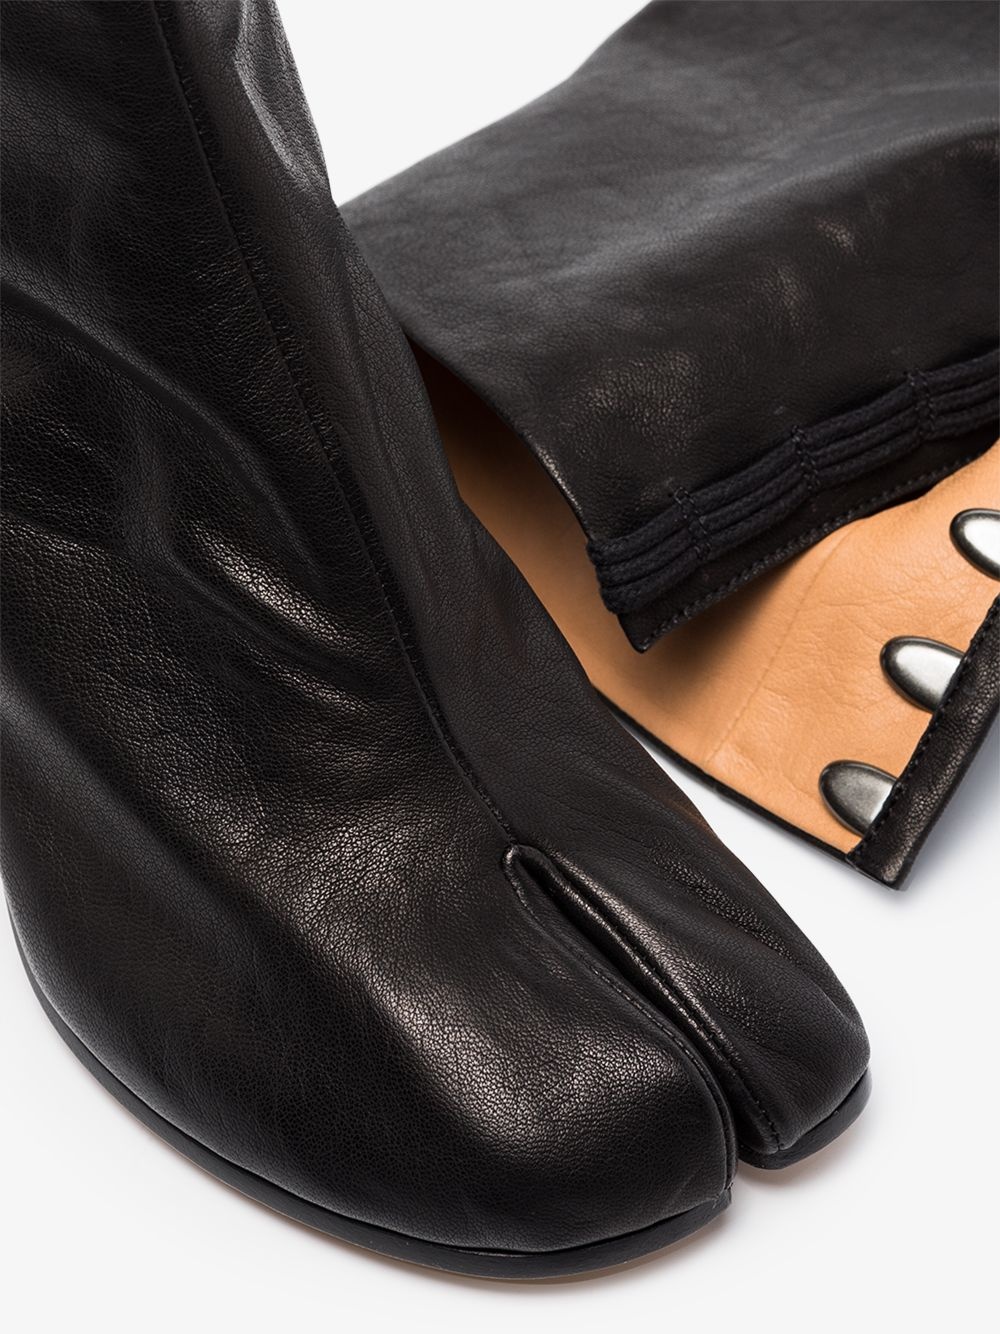 Tabi leather boots - 5